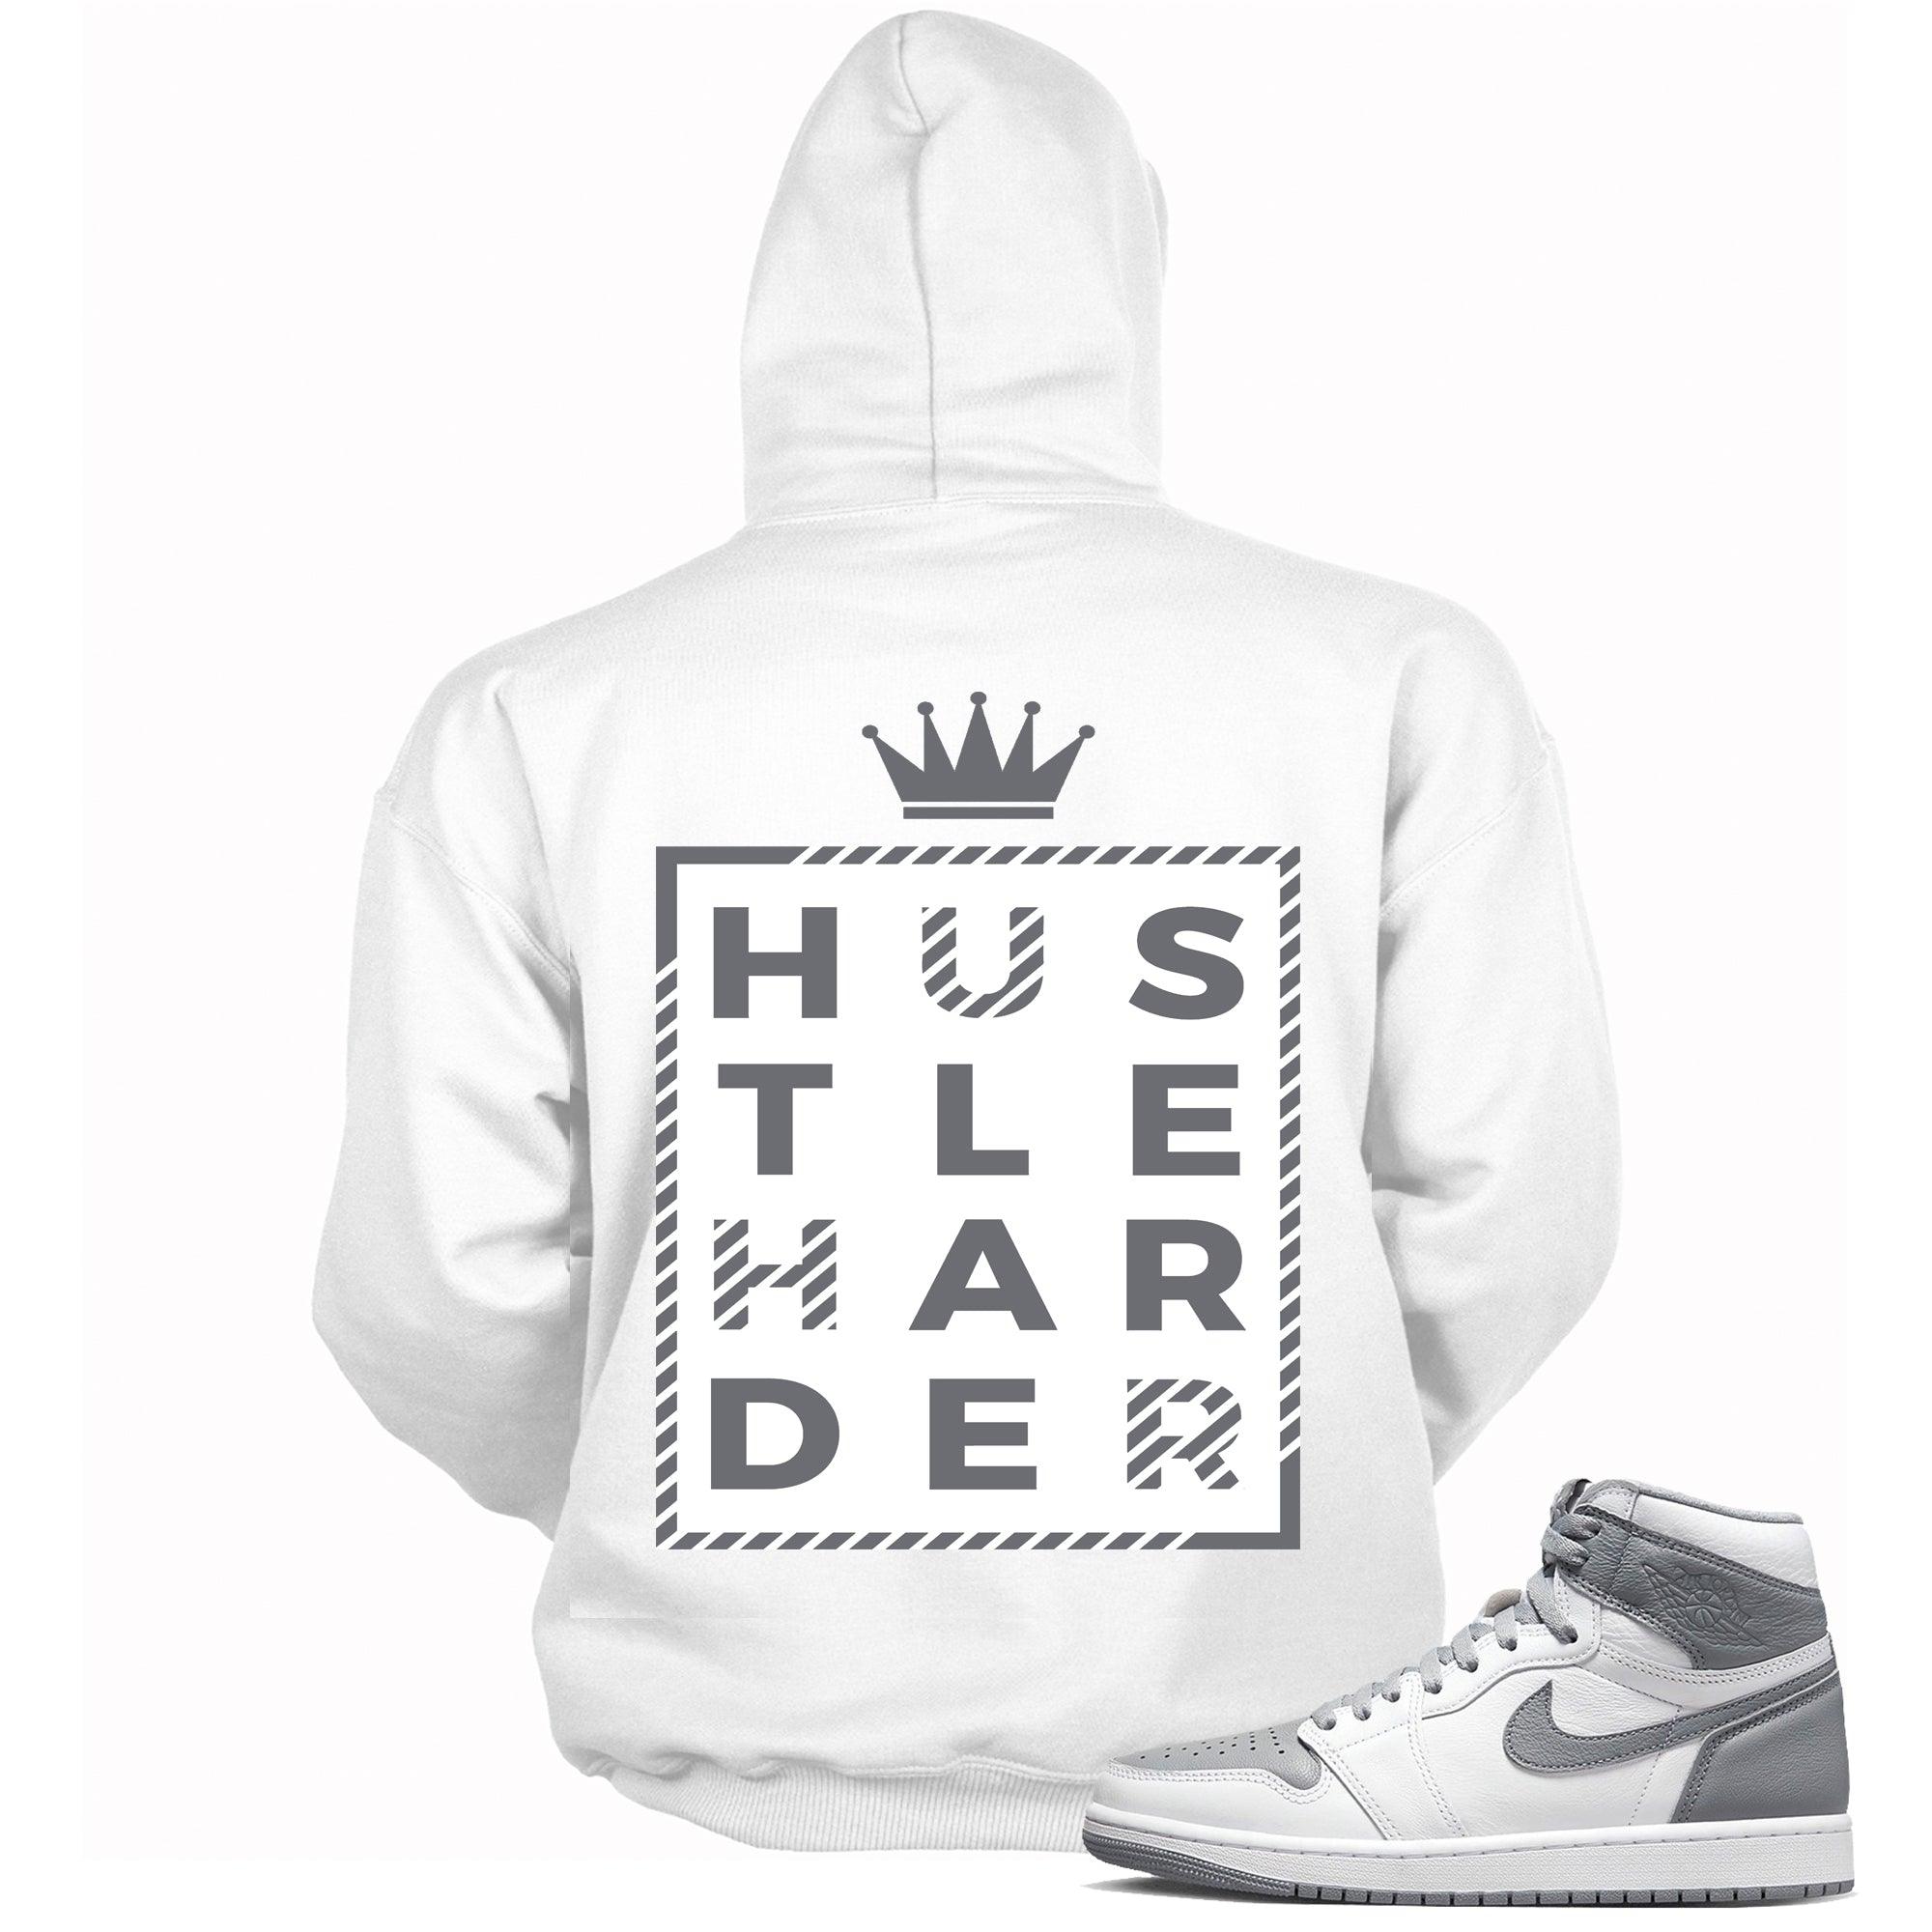 Hustle Harder Hoodie for Jordan 1s photo